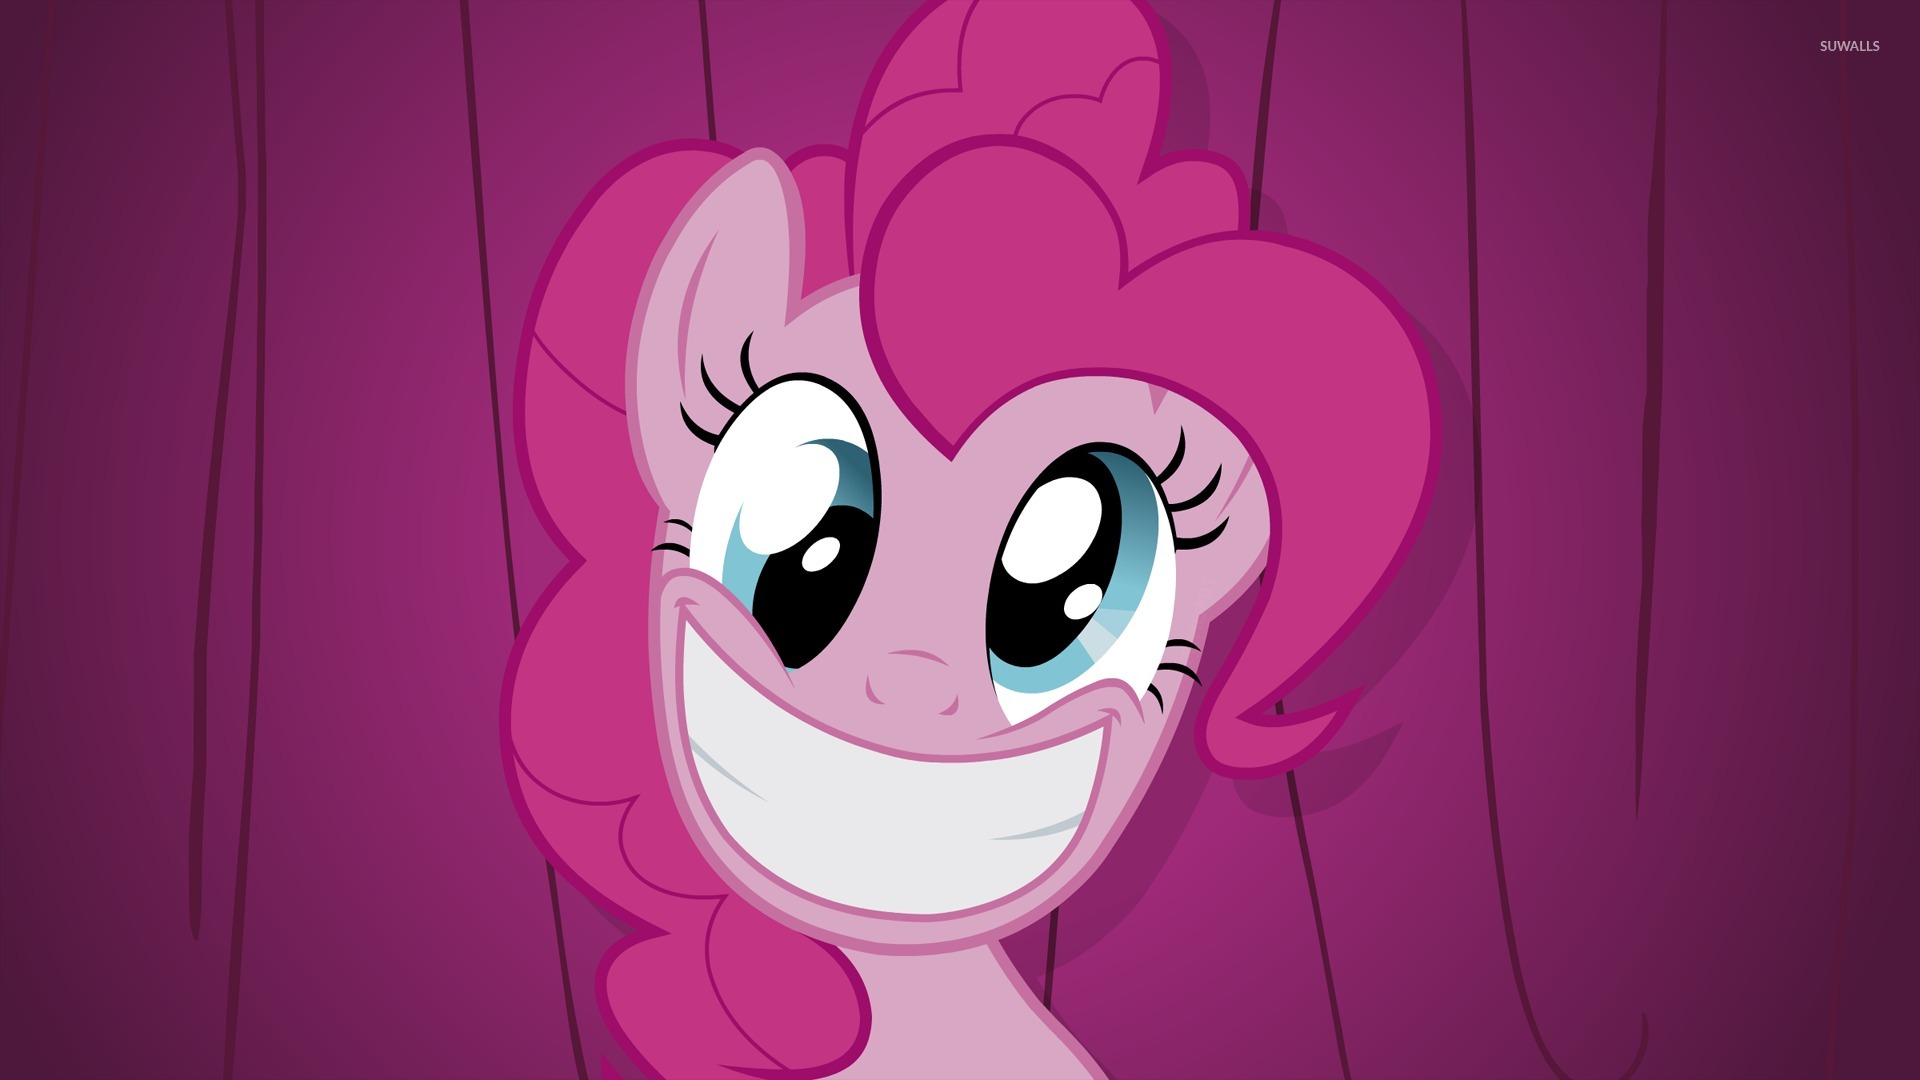 Pinkie Pie smiling close-up - My Little Pony wallpaper - Cartoon ...